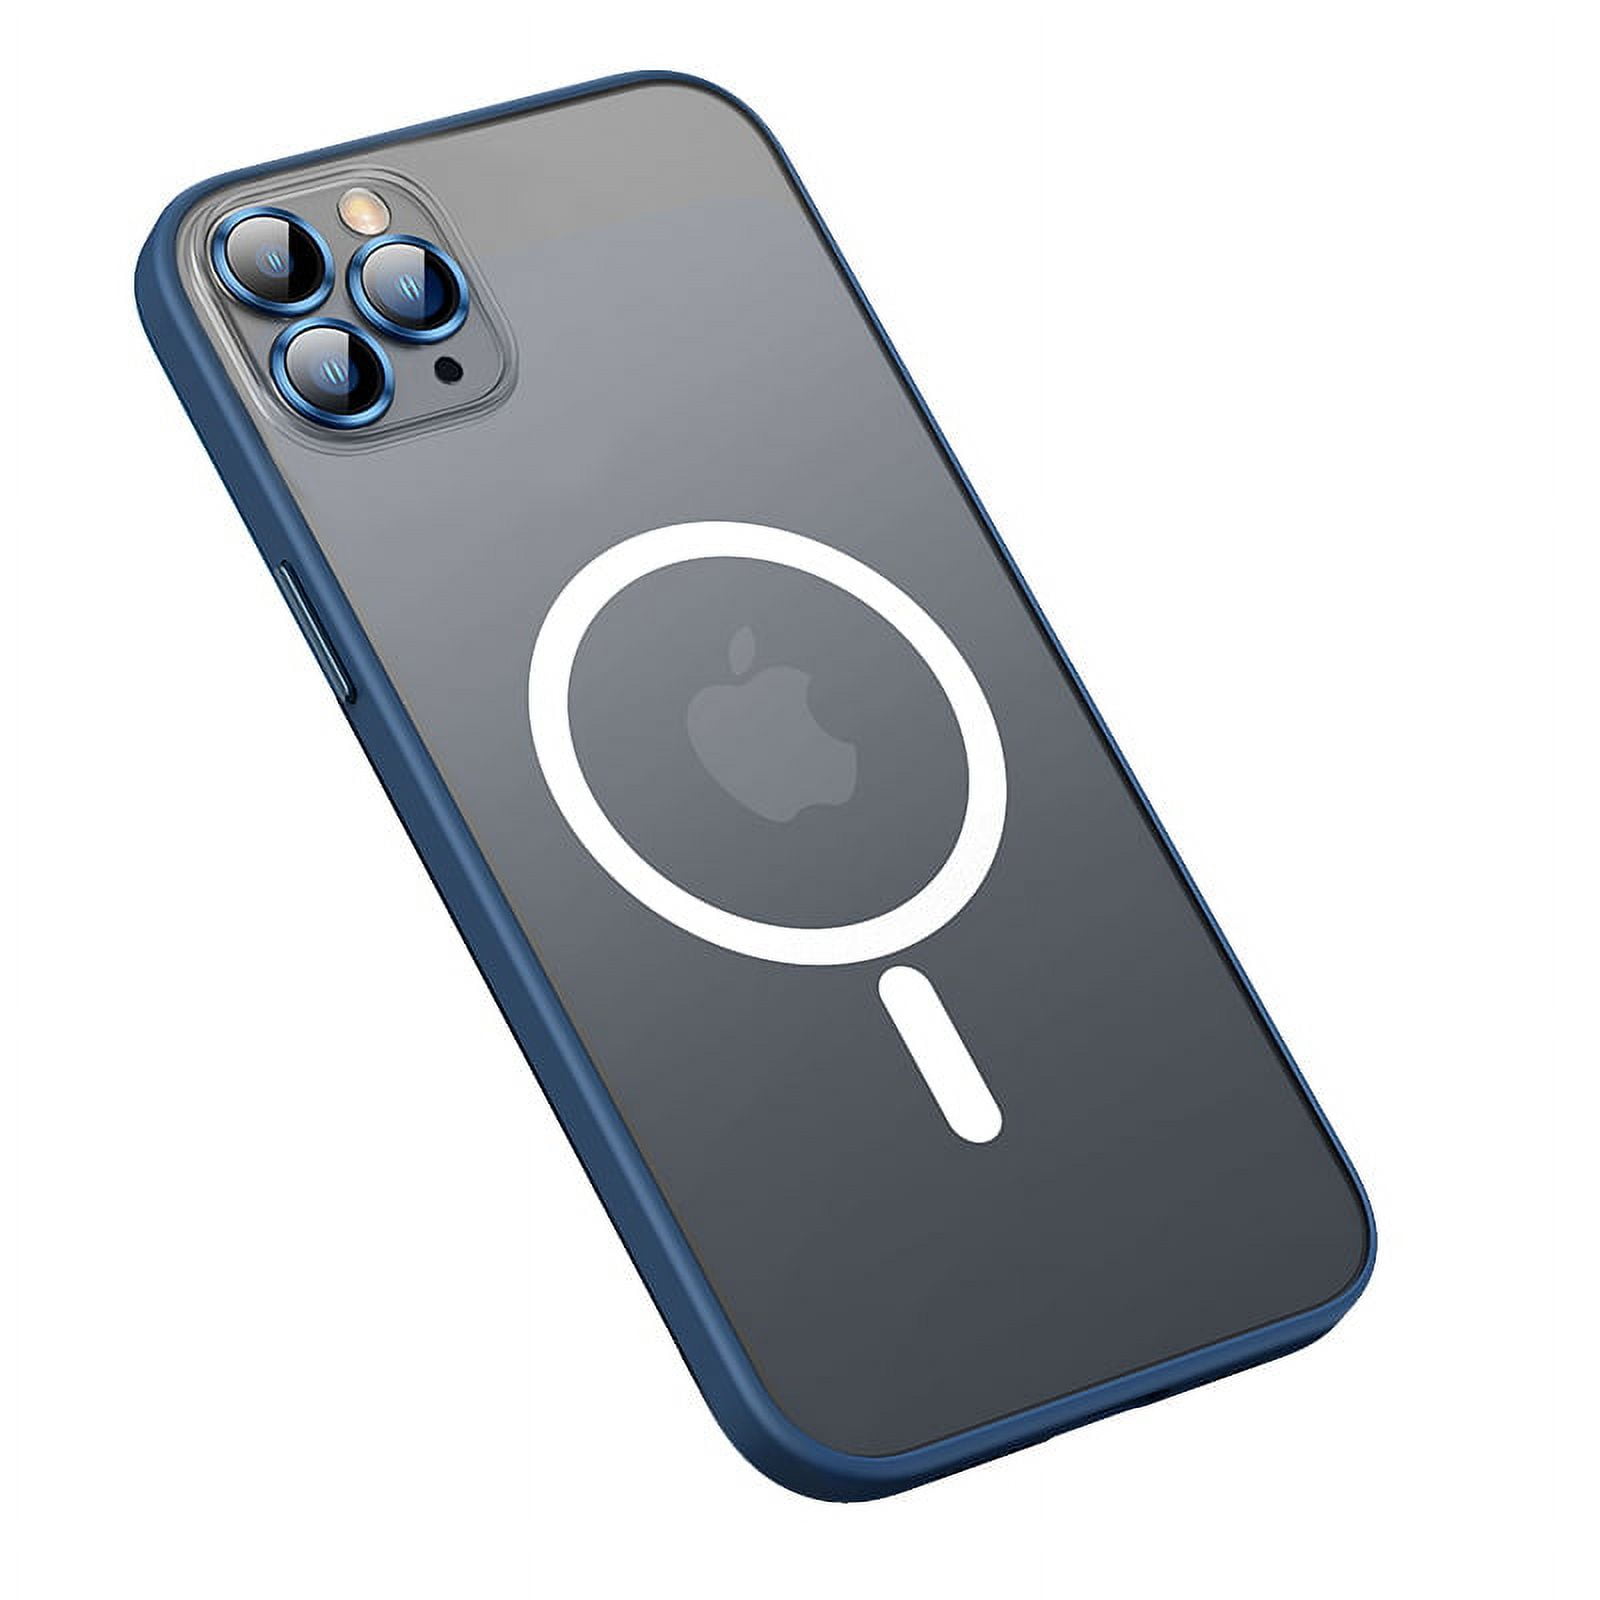 iPhone 11 Pro Max Handyhülle für MagSafe-Ladegerät Transparent